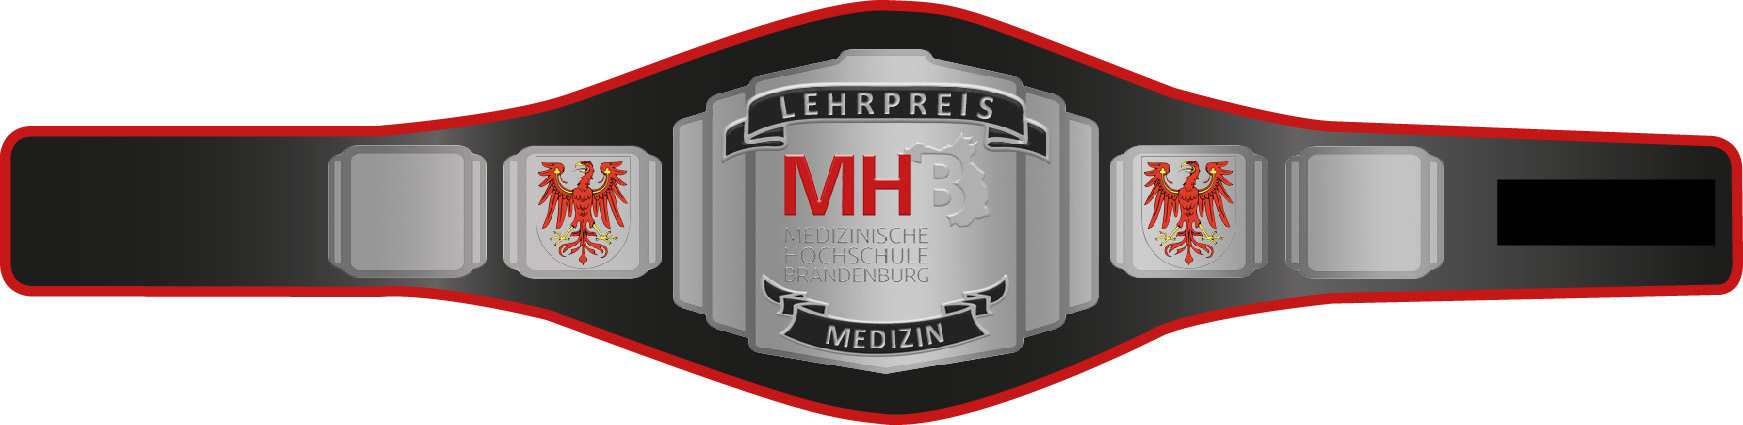 MHB Lehrpreis Medizin Champion Gürtel